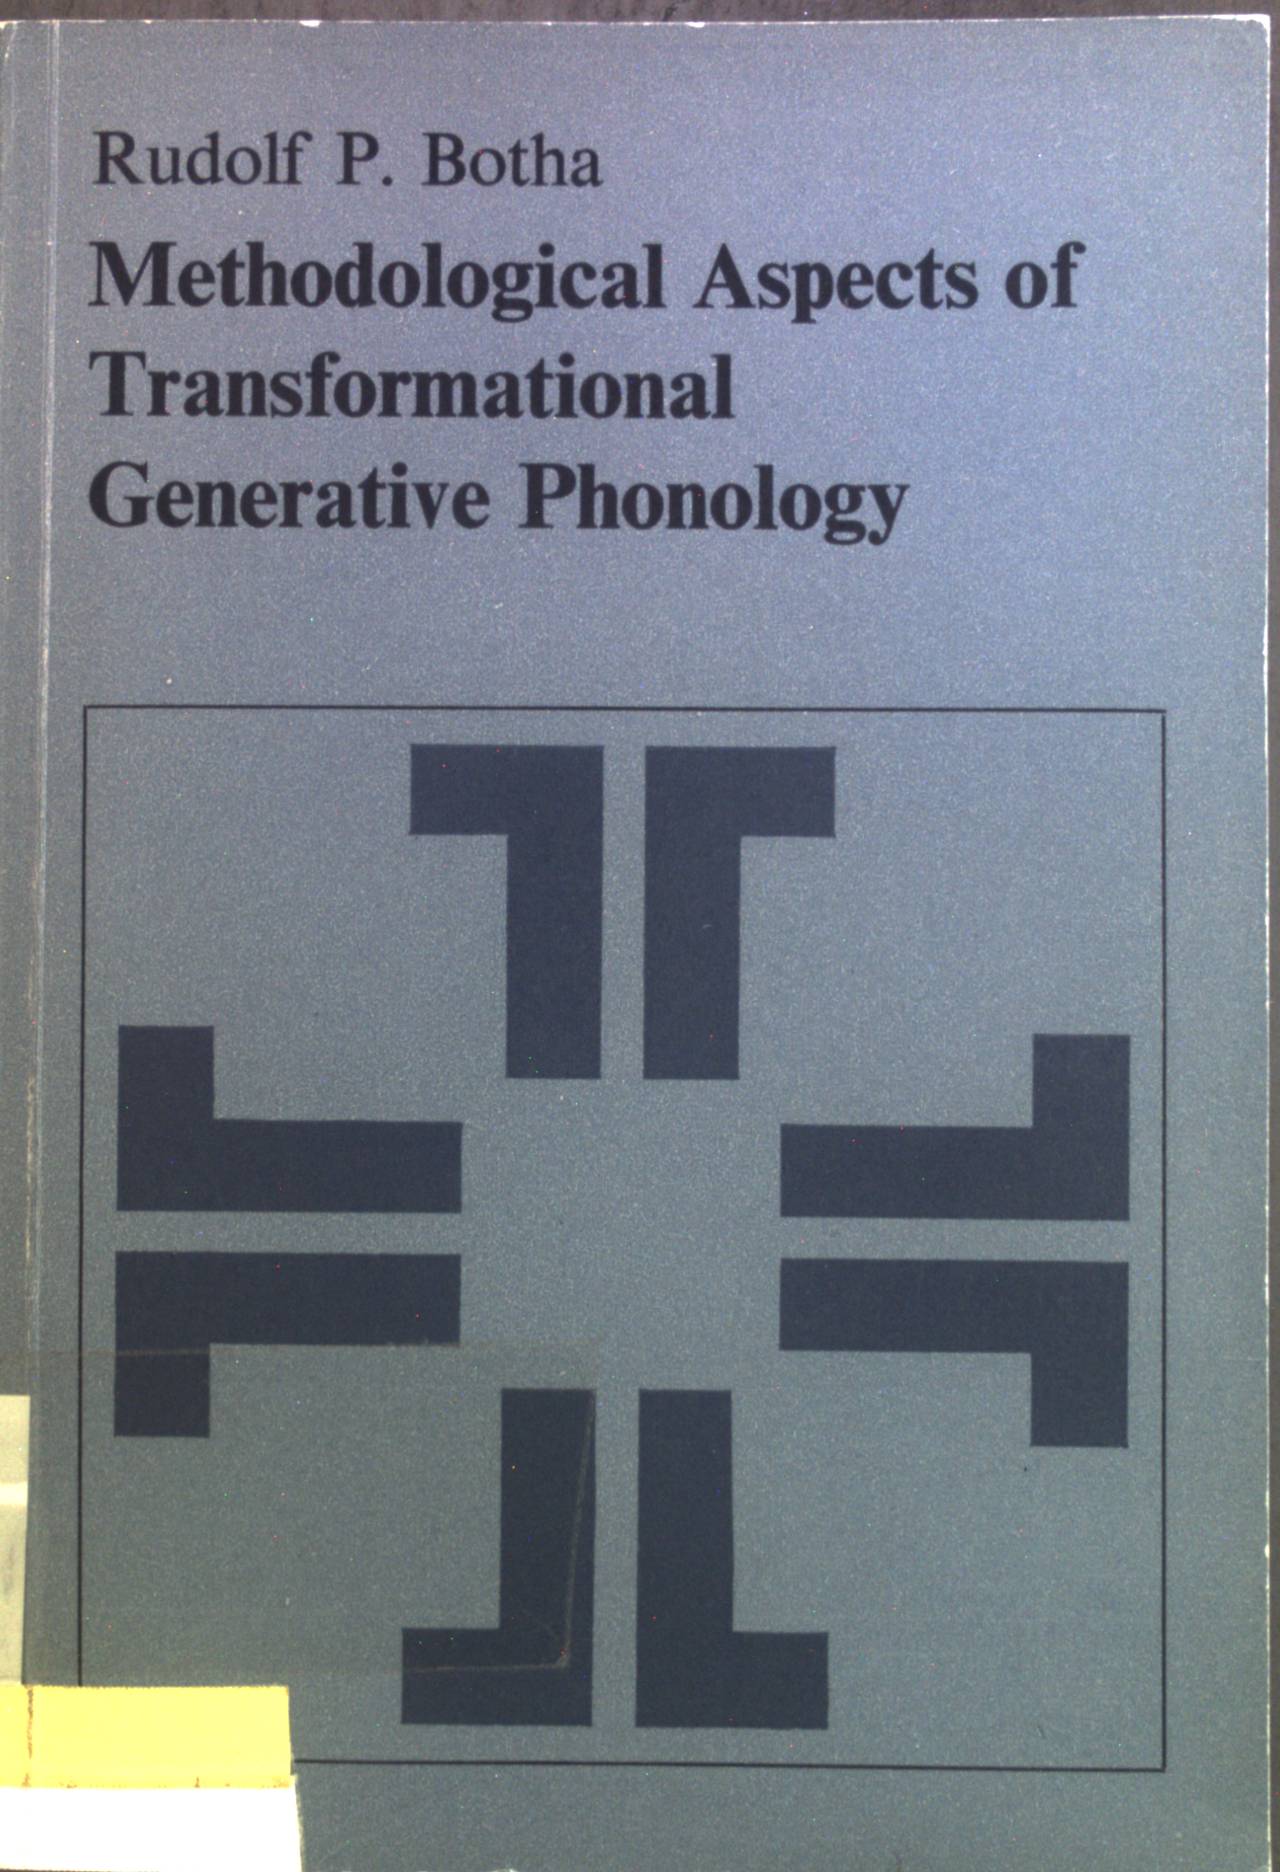 Methodological aspects of transformational generative phonology. Janua linguarum, series minor 112. - Botha, Rudolf P.